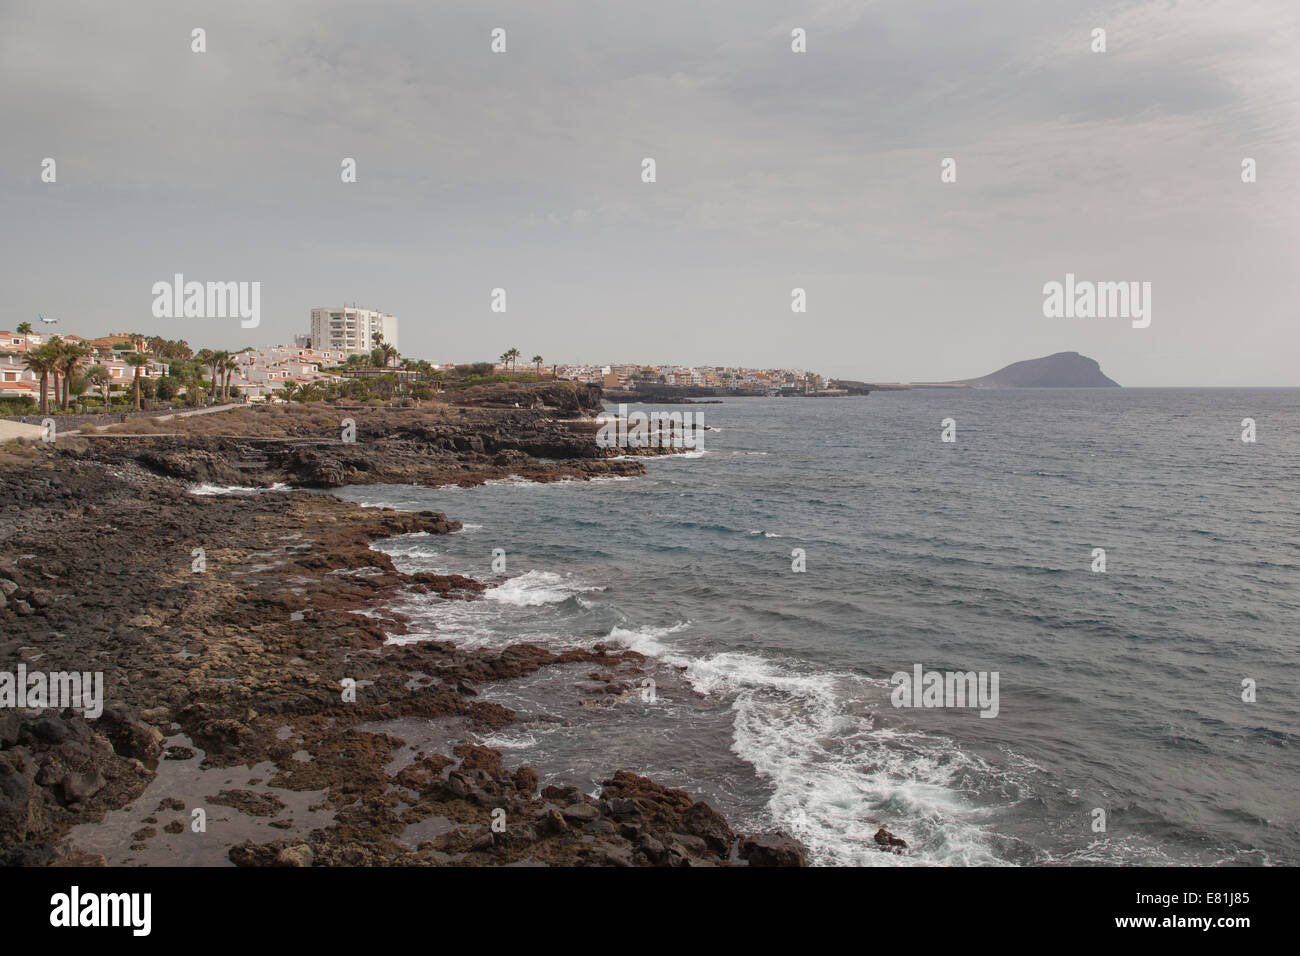 Canary Islands Tenerife rocky beach waves break town in distance Stock Photo